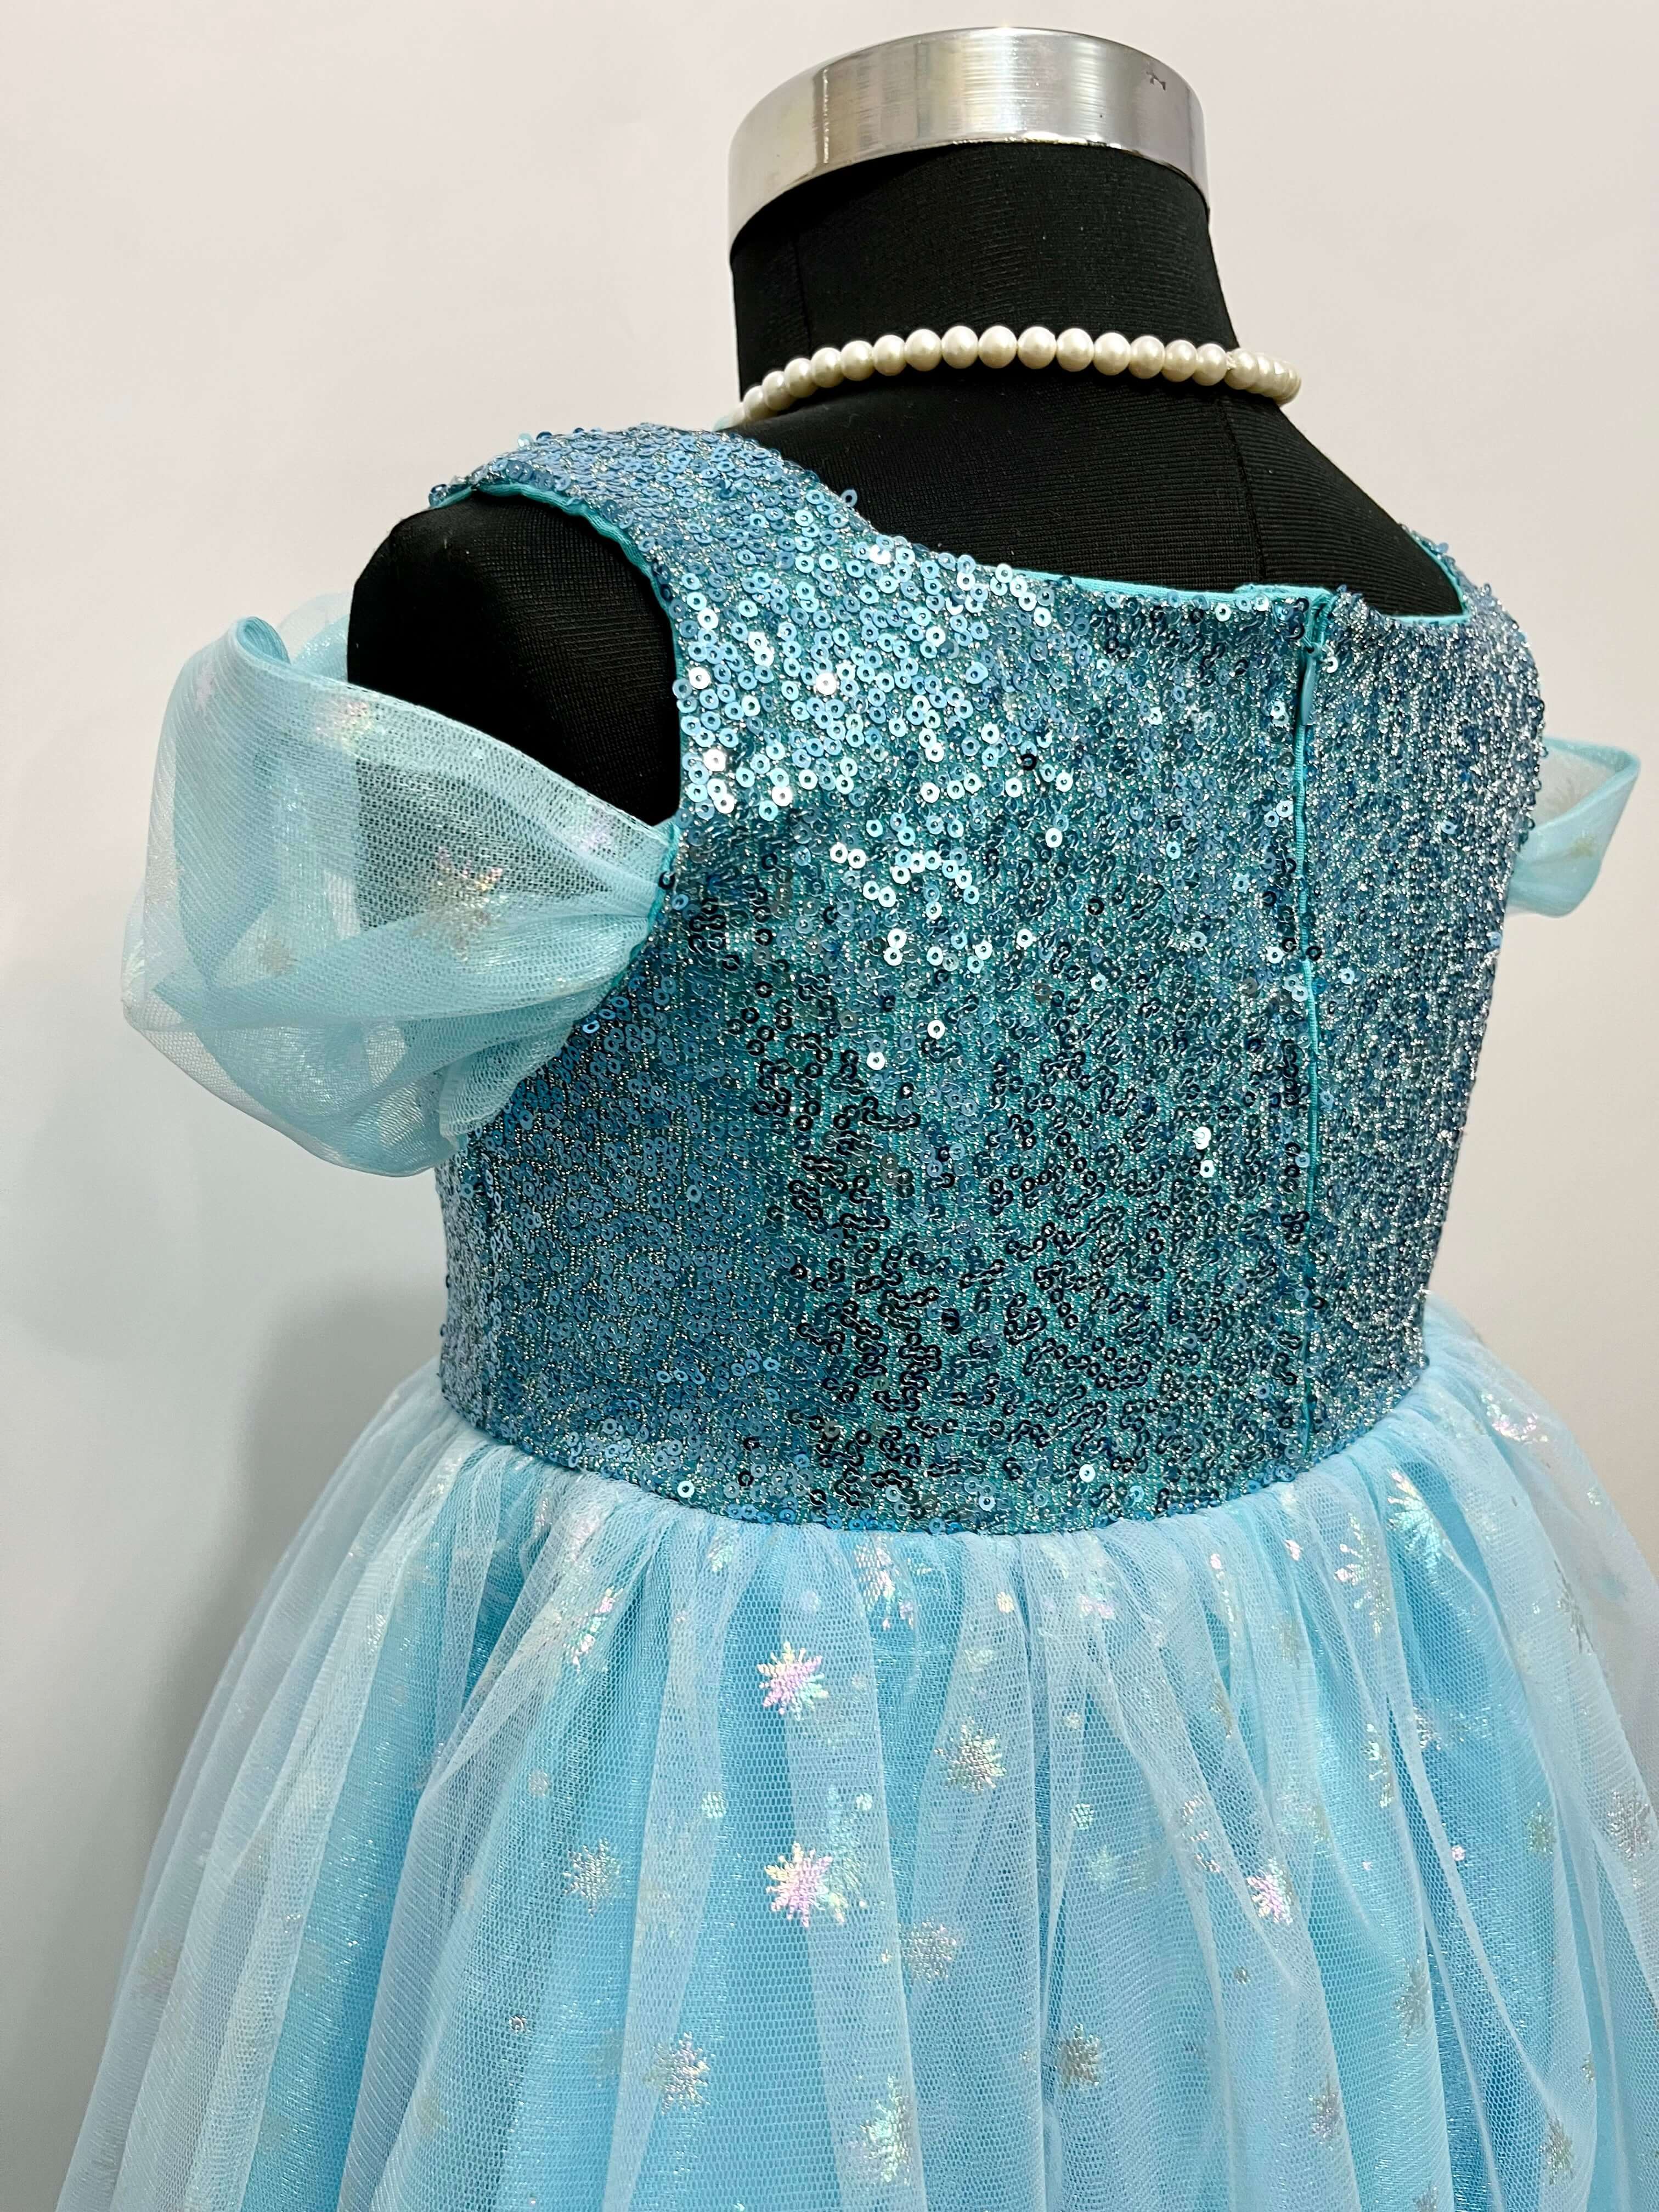 Elsa's Dress - Disney's FROZEN by gabriellayoo on DeviantArt | Vestido de elsa  frozen, Disfraz de elsa frozen, Vestido de frozen